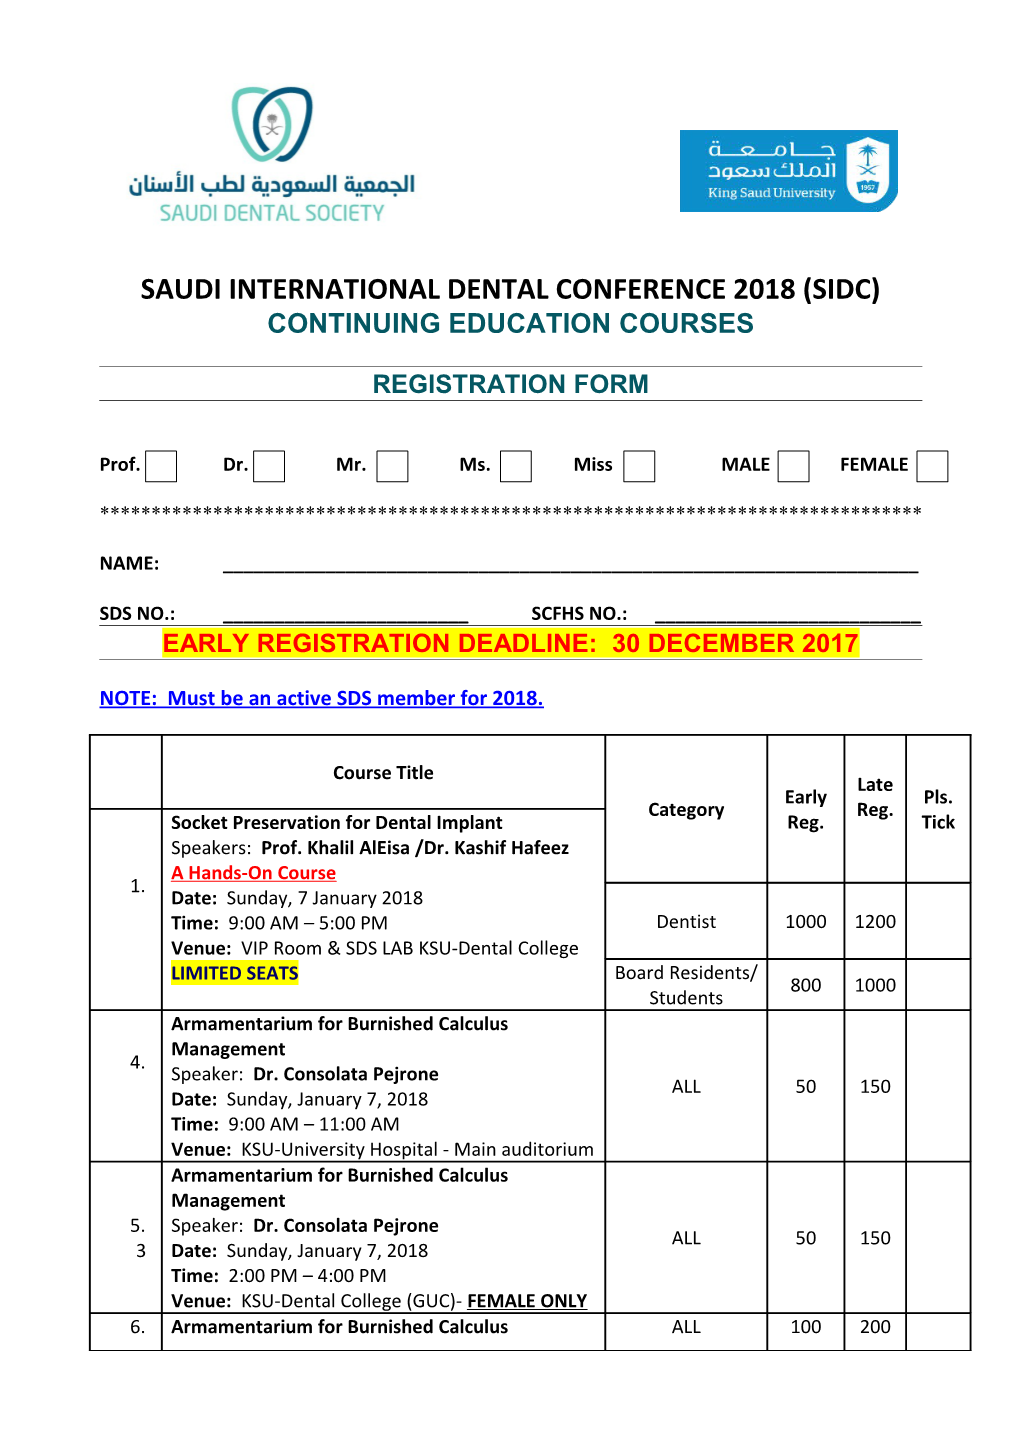 Saudi International Dental Conference 2018 (Sidc)